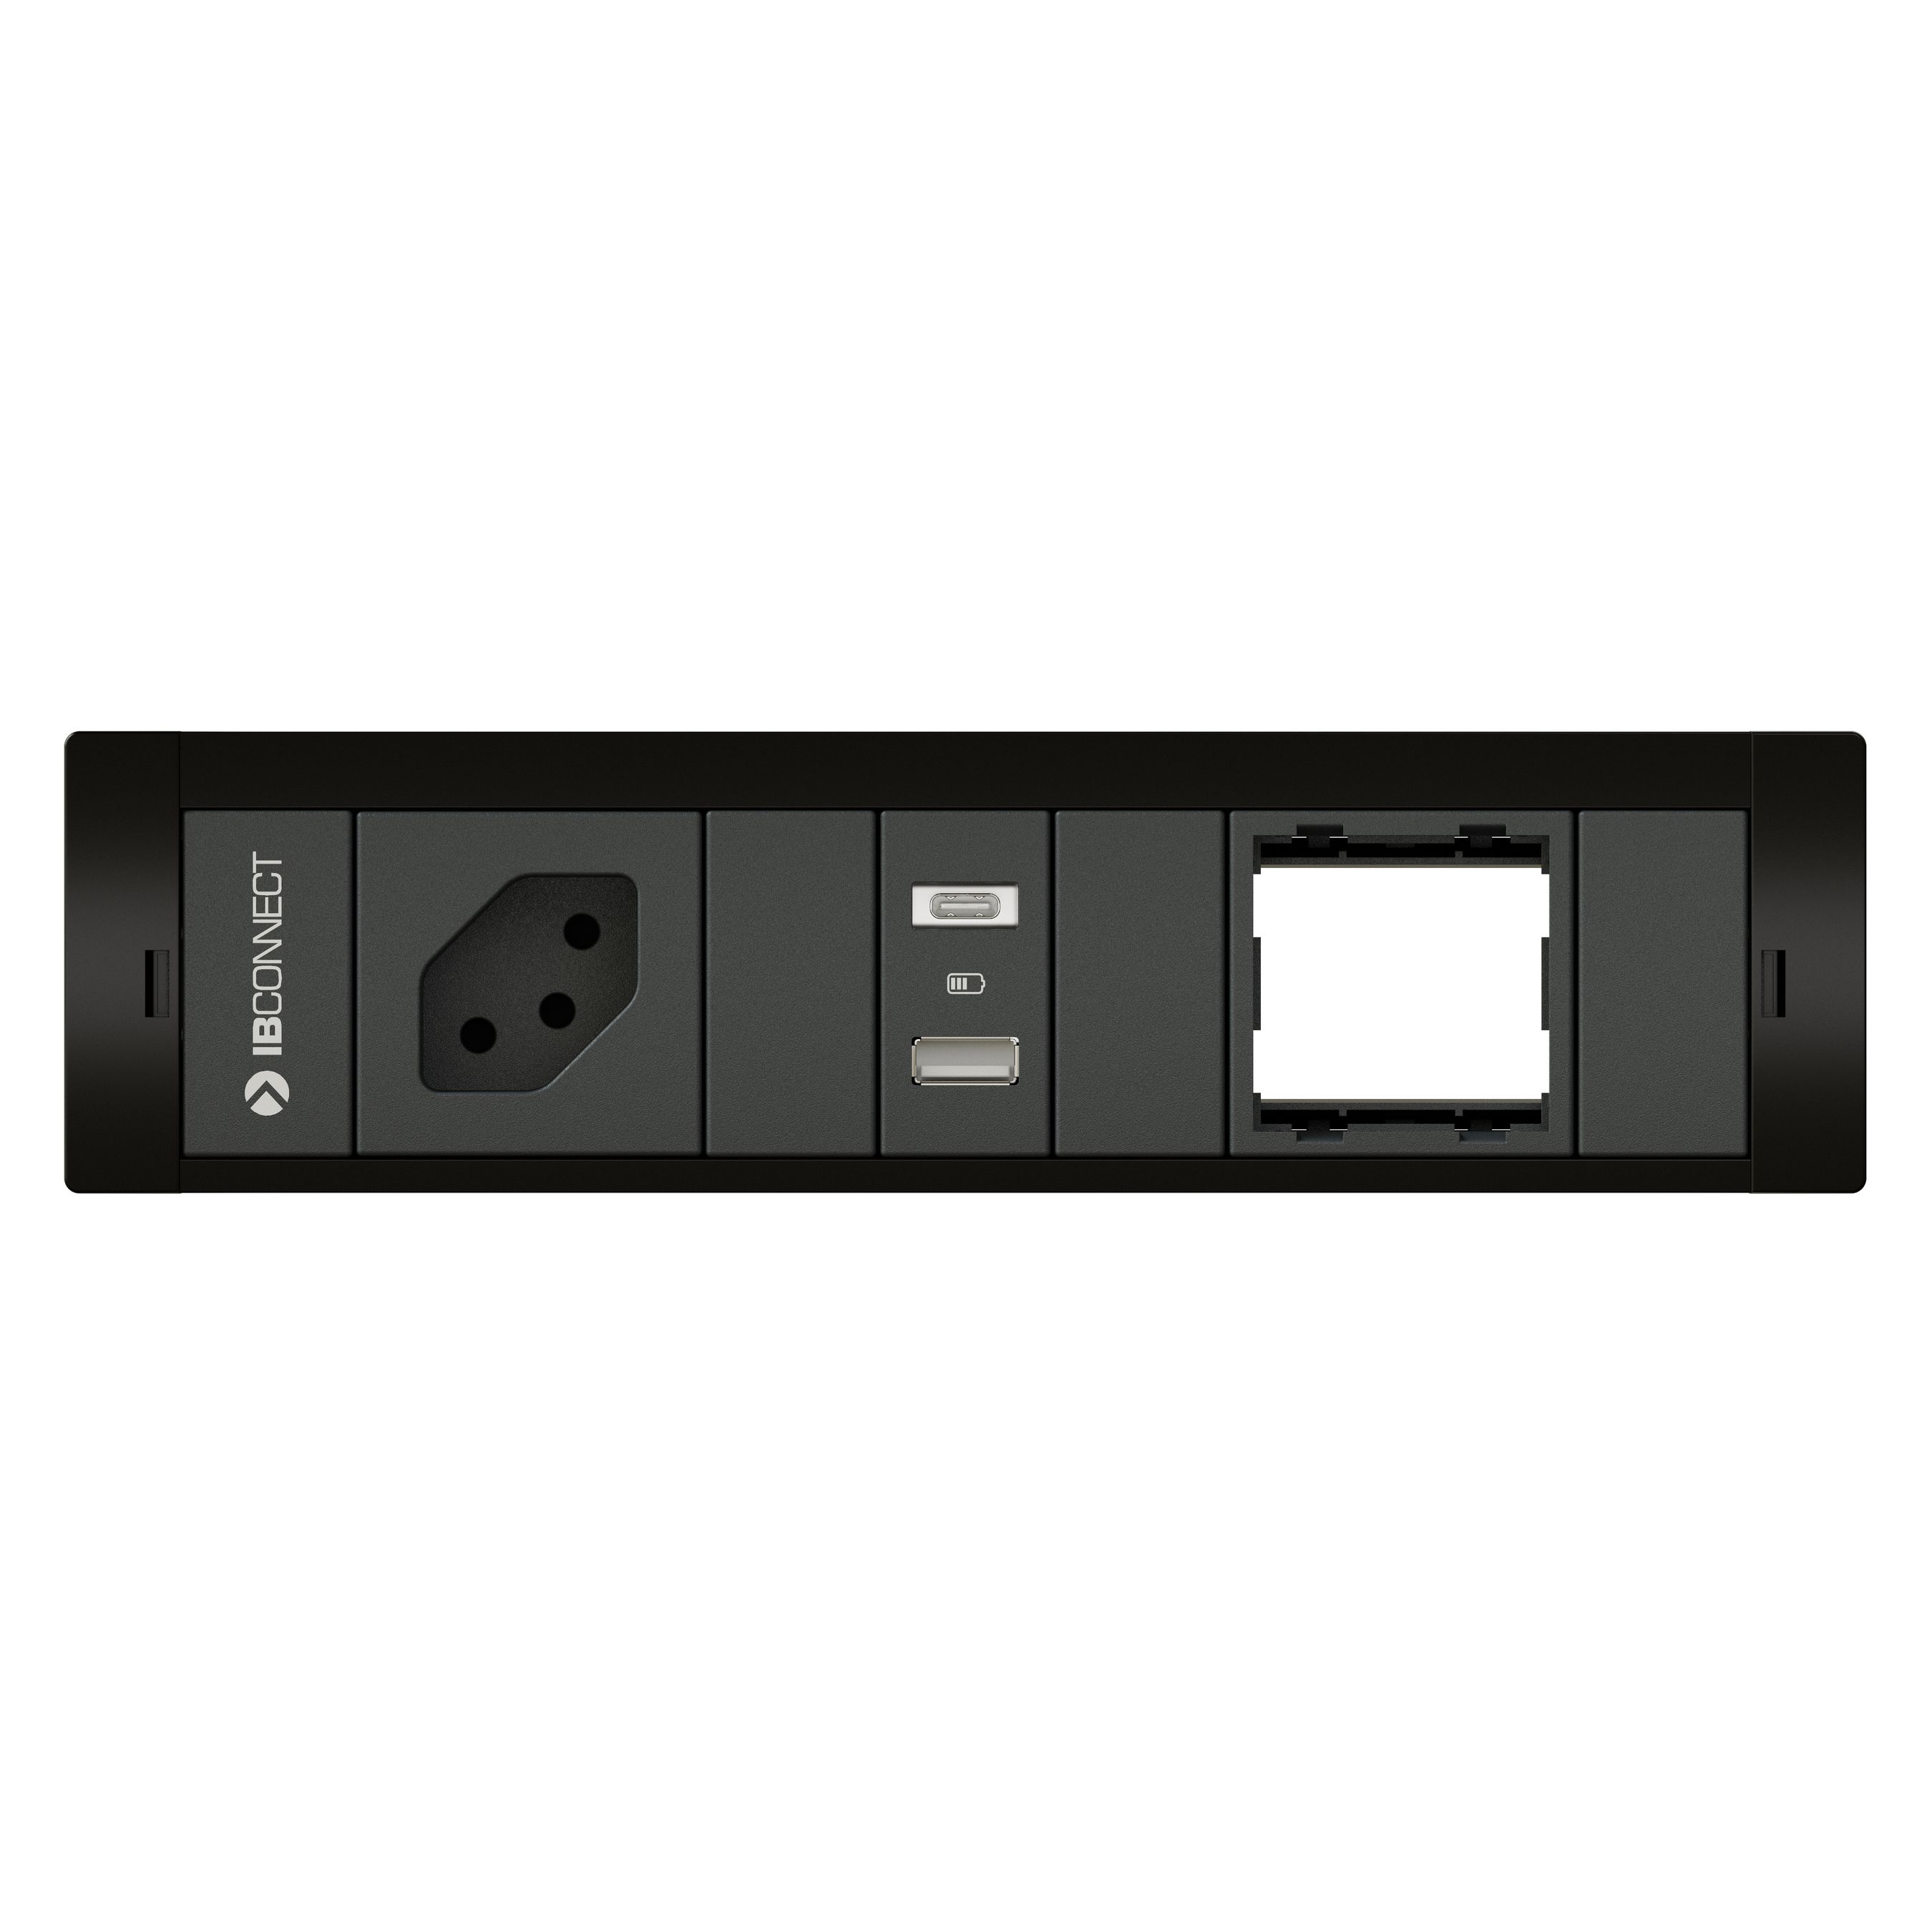 CUBOBOX presa multipla nero S 3 1x tipo 13 1x USB-A/C 1x vuoto